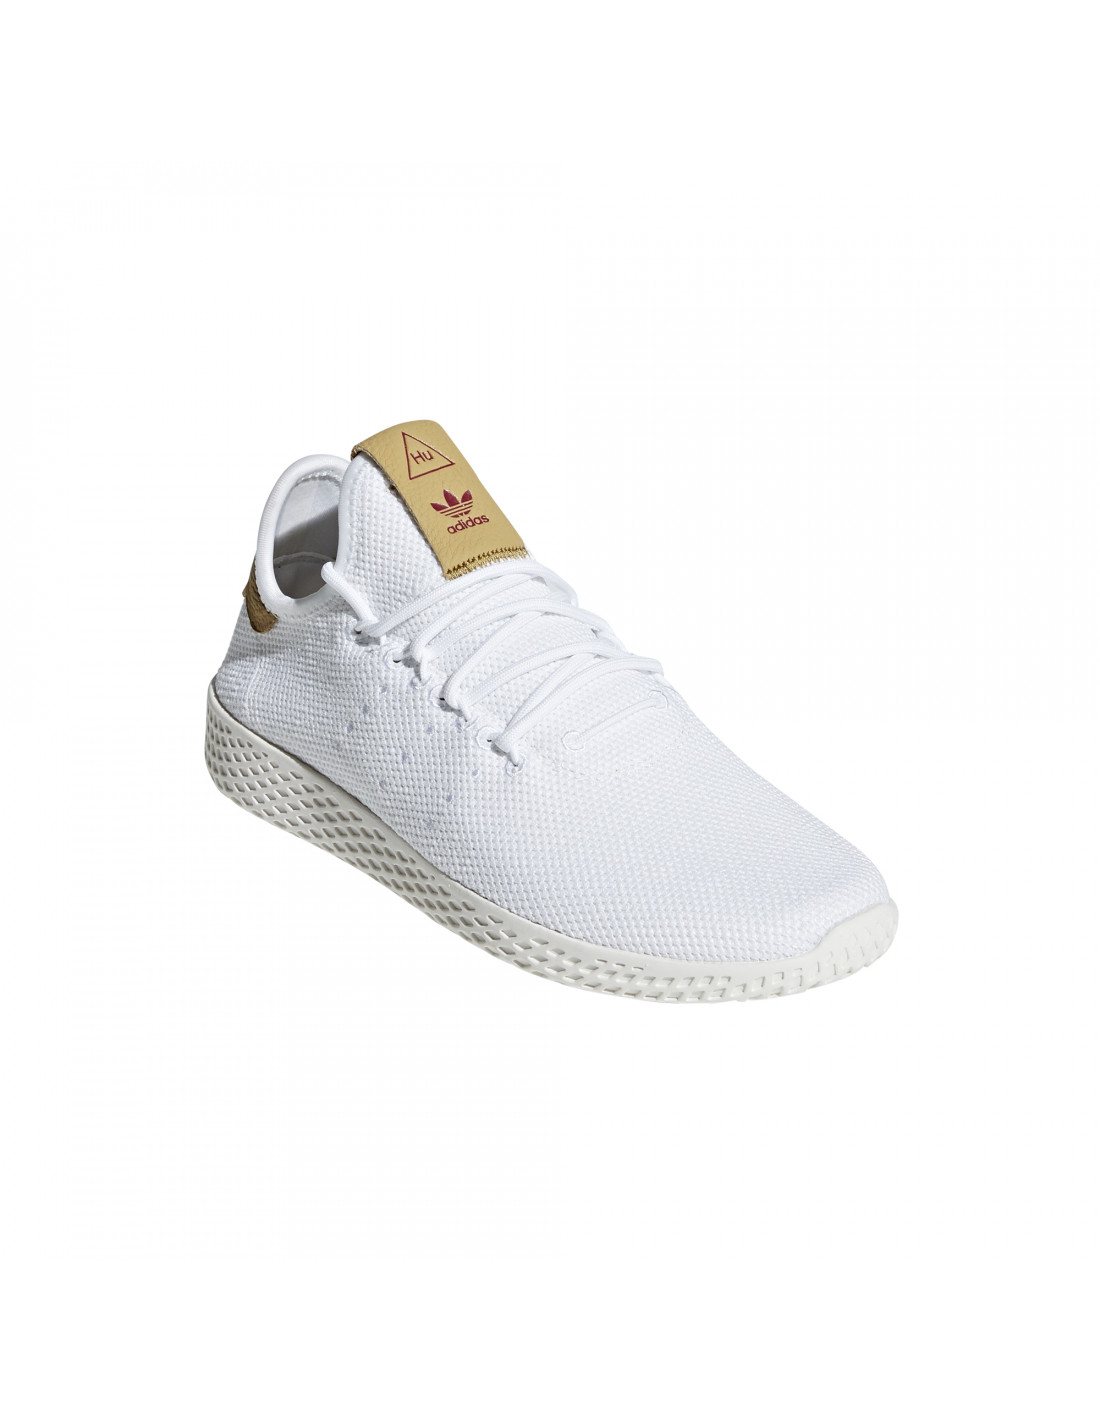 adidas Originals Pharrell Williams Tennis HU Color Blanco Tallas calzado adidas Originals 2/3